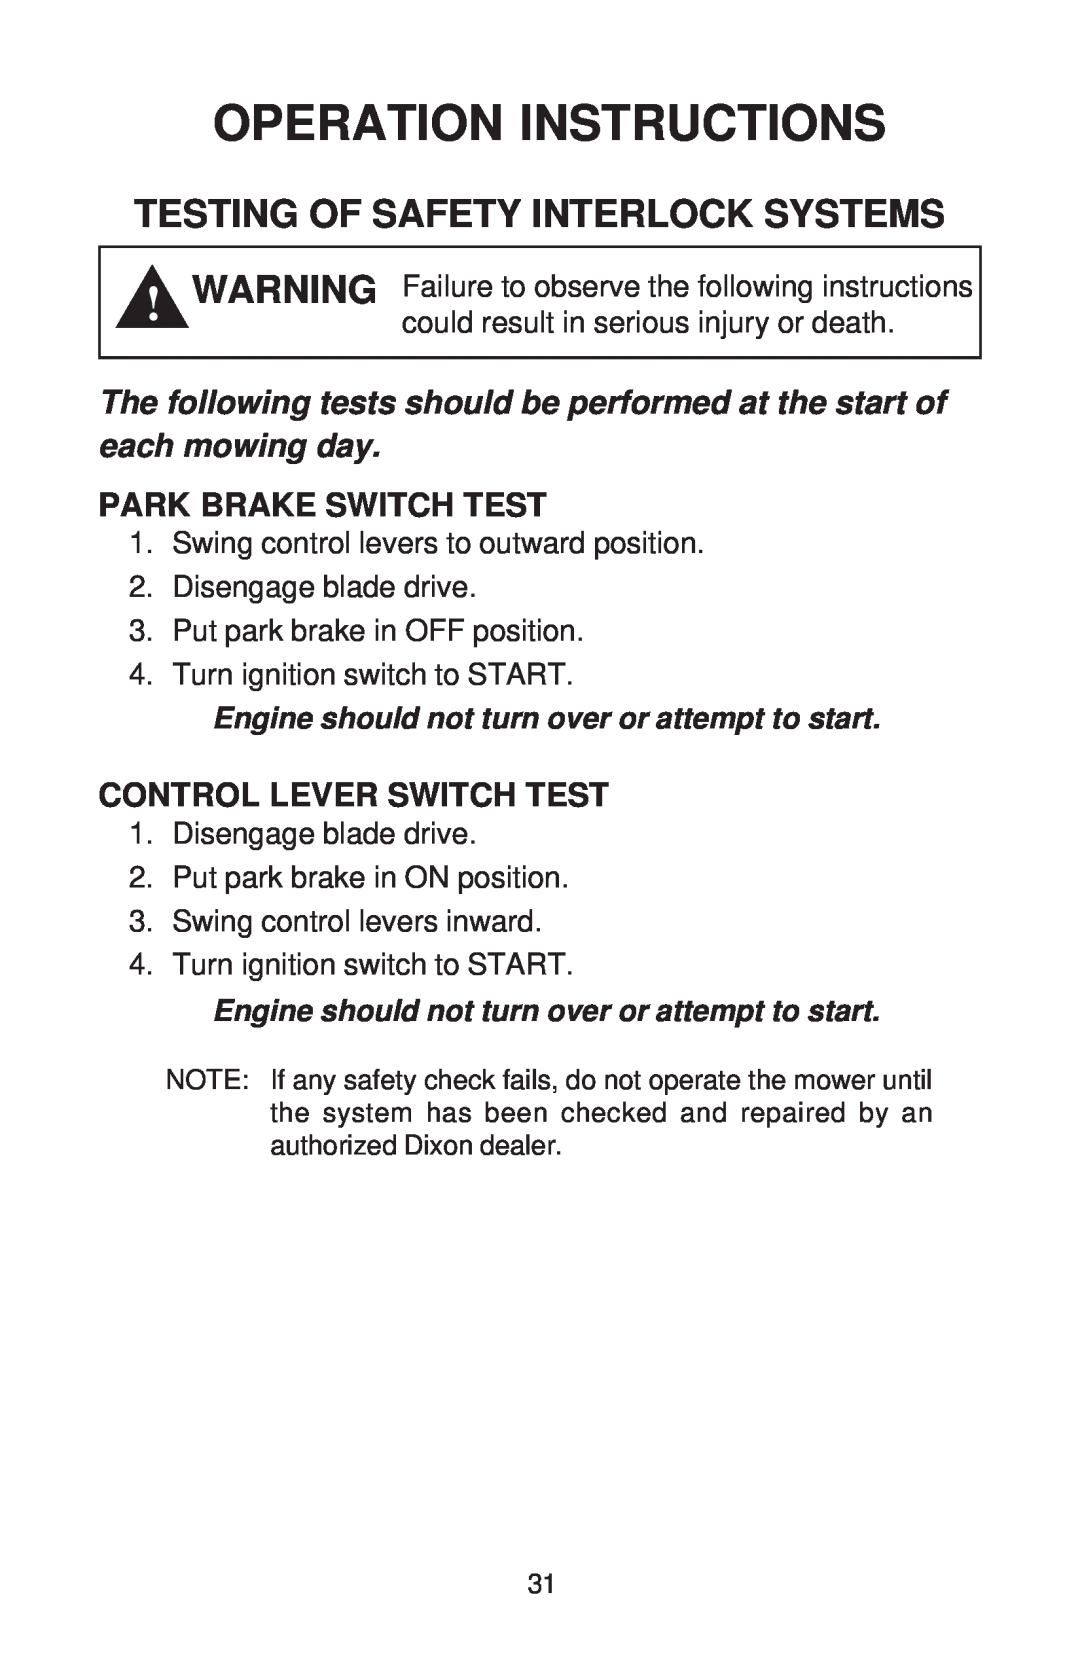 Dixon RAM 44, BS, BS, HON, KOH, KAW, HON manual Testing Of Safety Interlock Systems, Park Brake Switch Test 